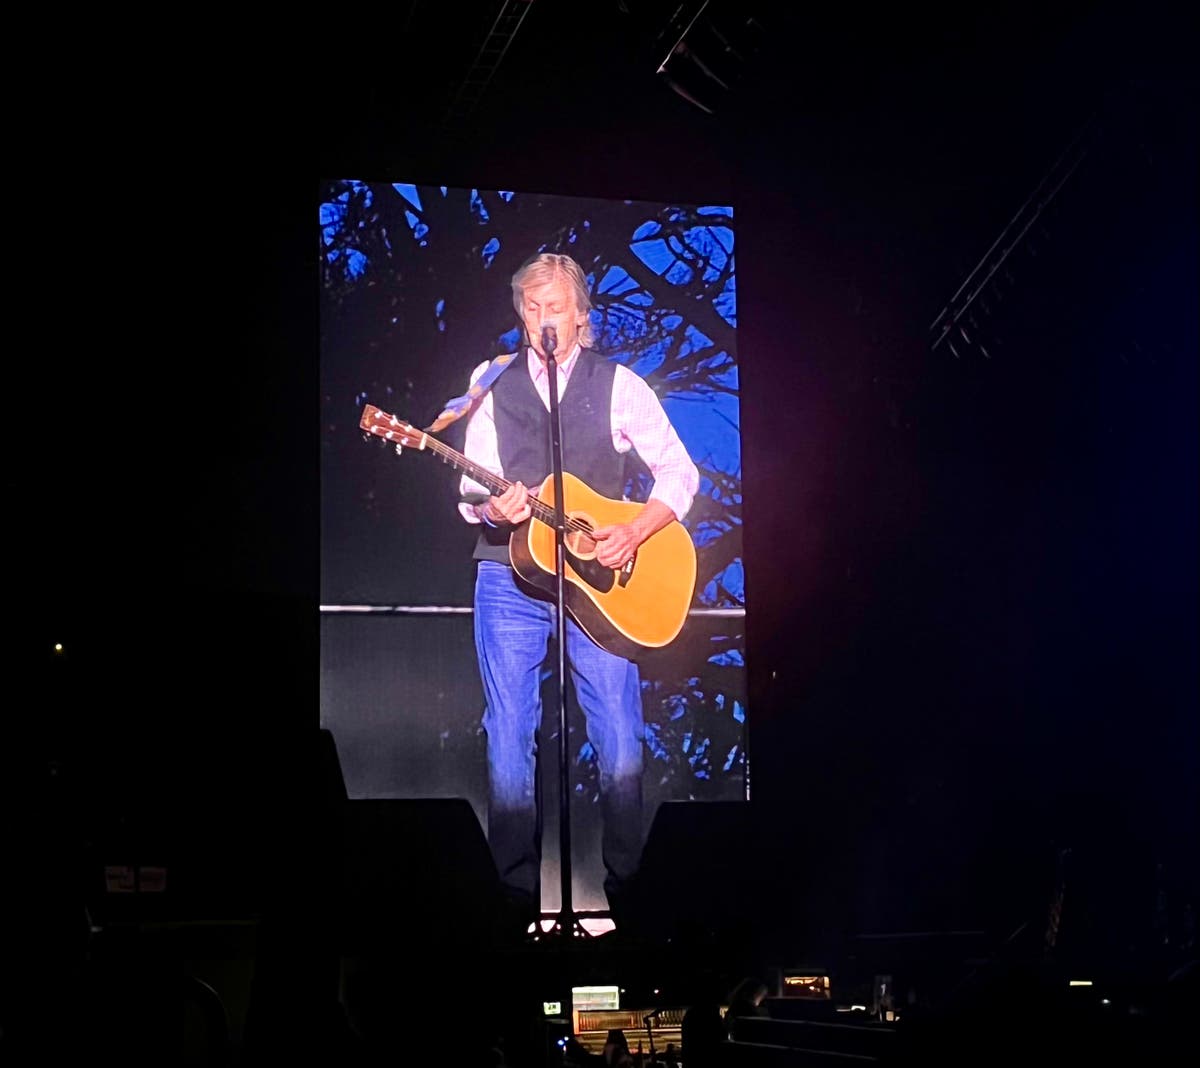 Sir Paul McCartney ‘duets with John Lennon’ during historic Spokane show